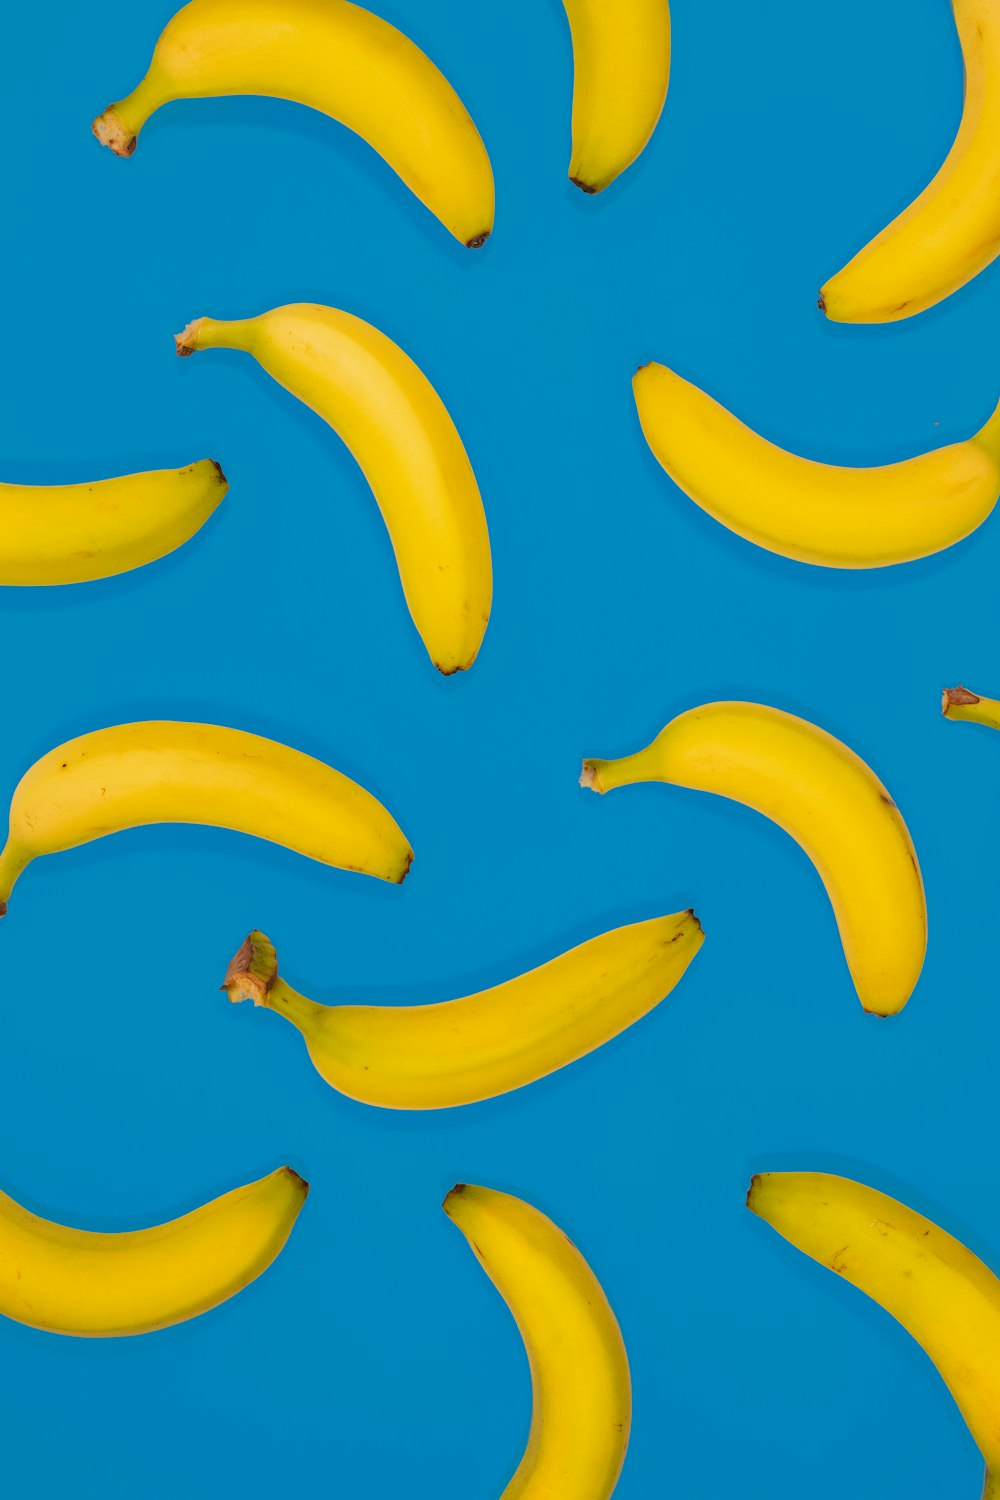 30k+ Bananas Pictures | Download Free Images on Unsplash